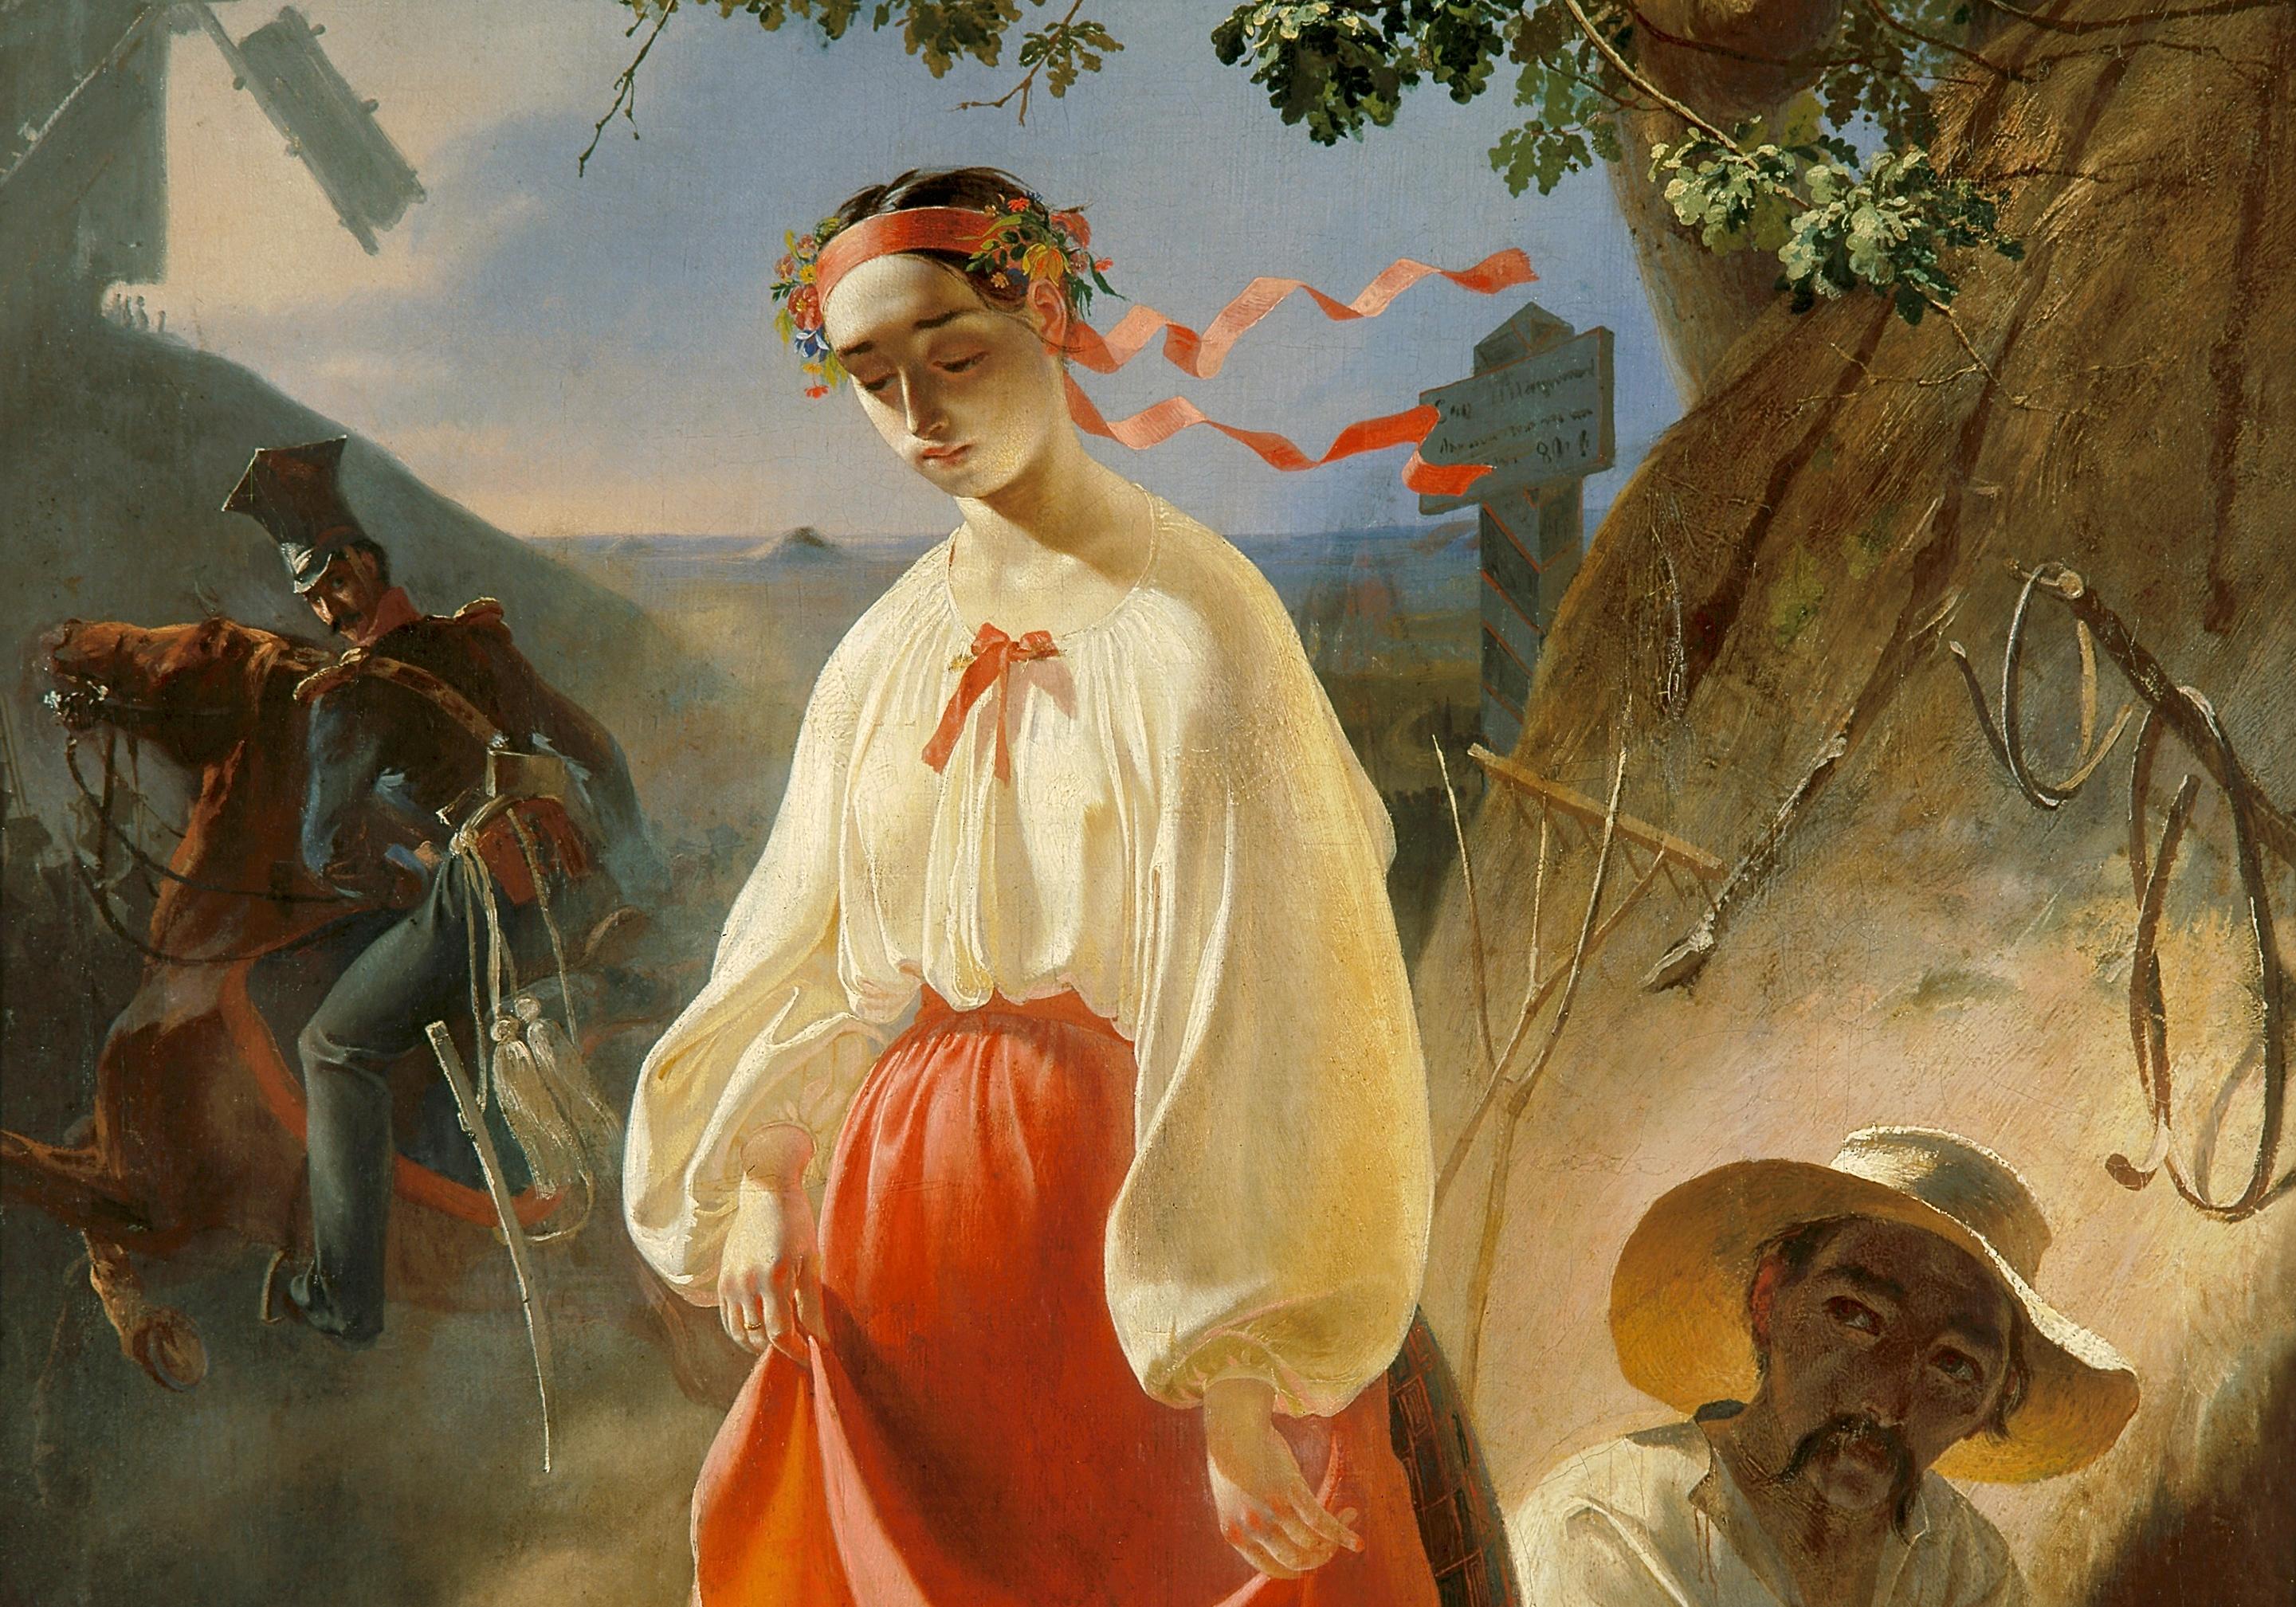 Картина Т. Шевченко "Катерина" (1842)